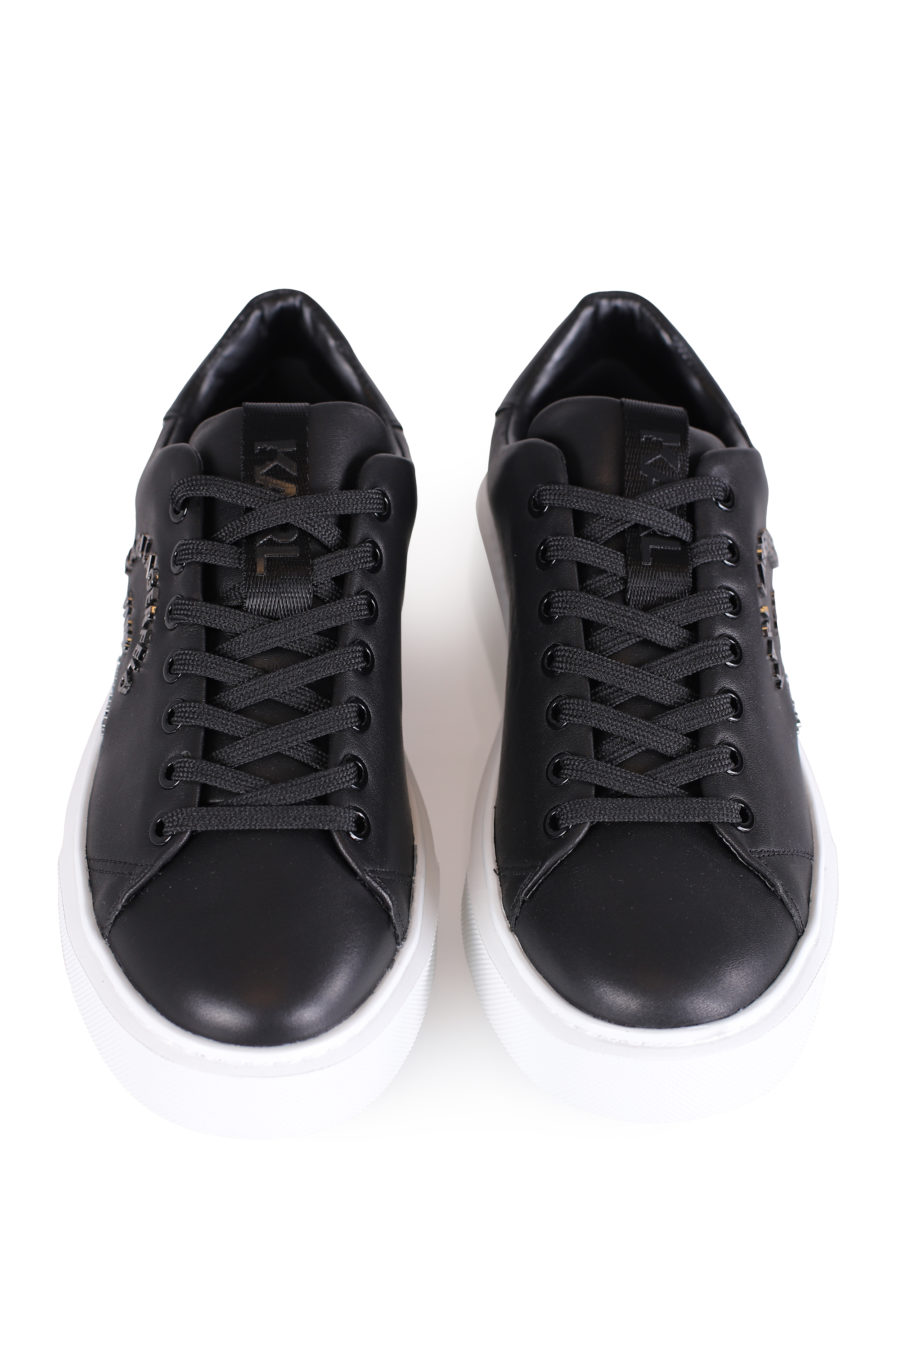 Zapatillas negras "Maxi Kup" con logo plateado - IMG 0789